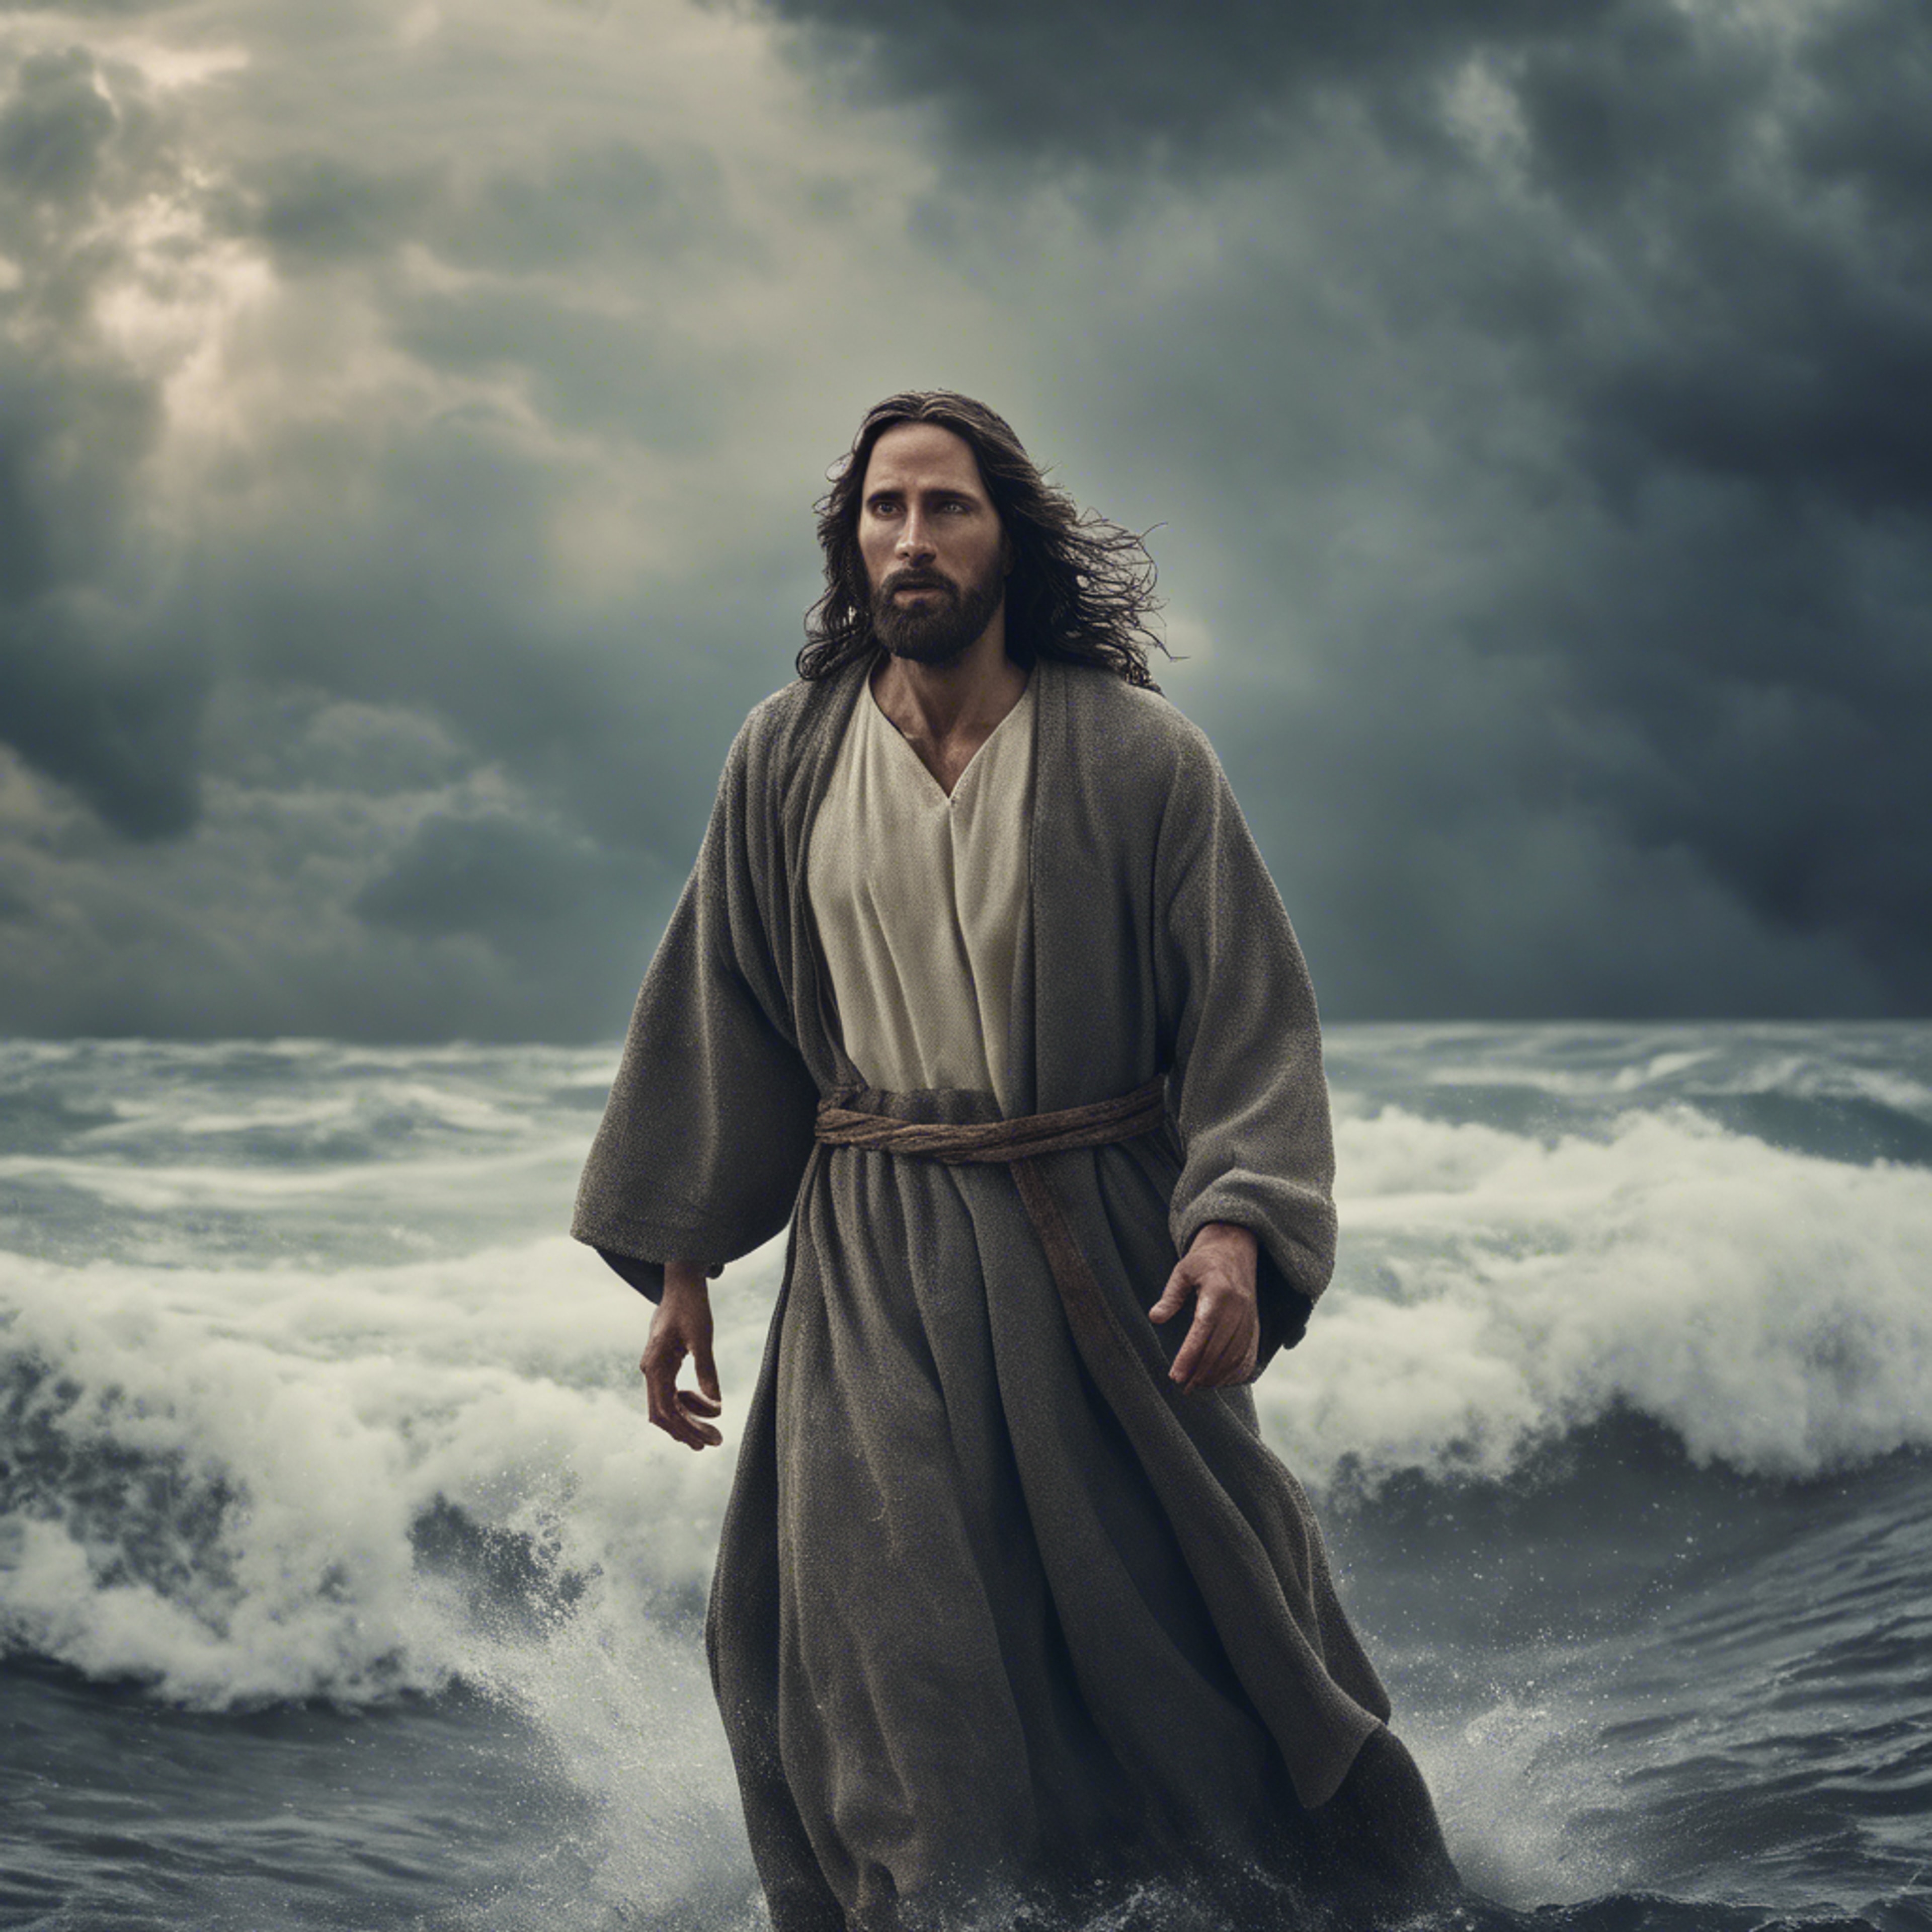 Jesus Christ calmly walking across a stormy sea under a dramatic, cloudy sky. טפט[40d9c306725247569090]